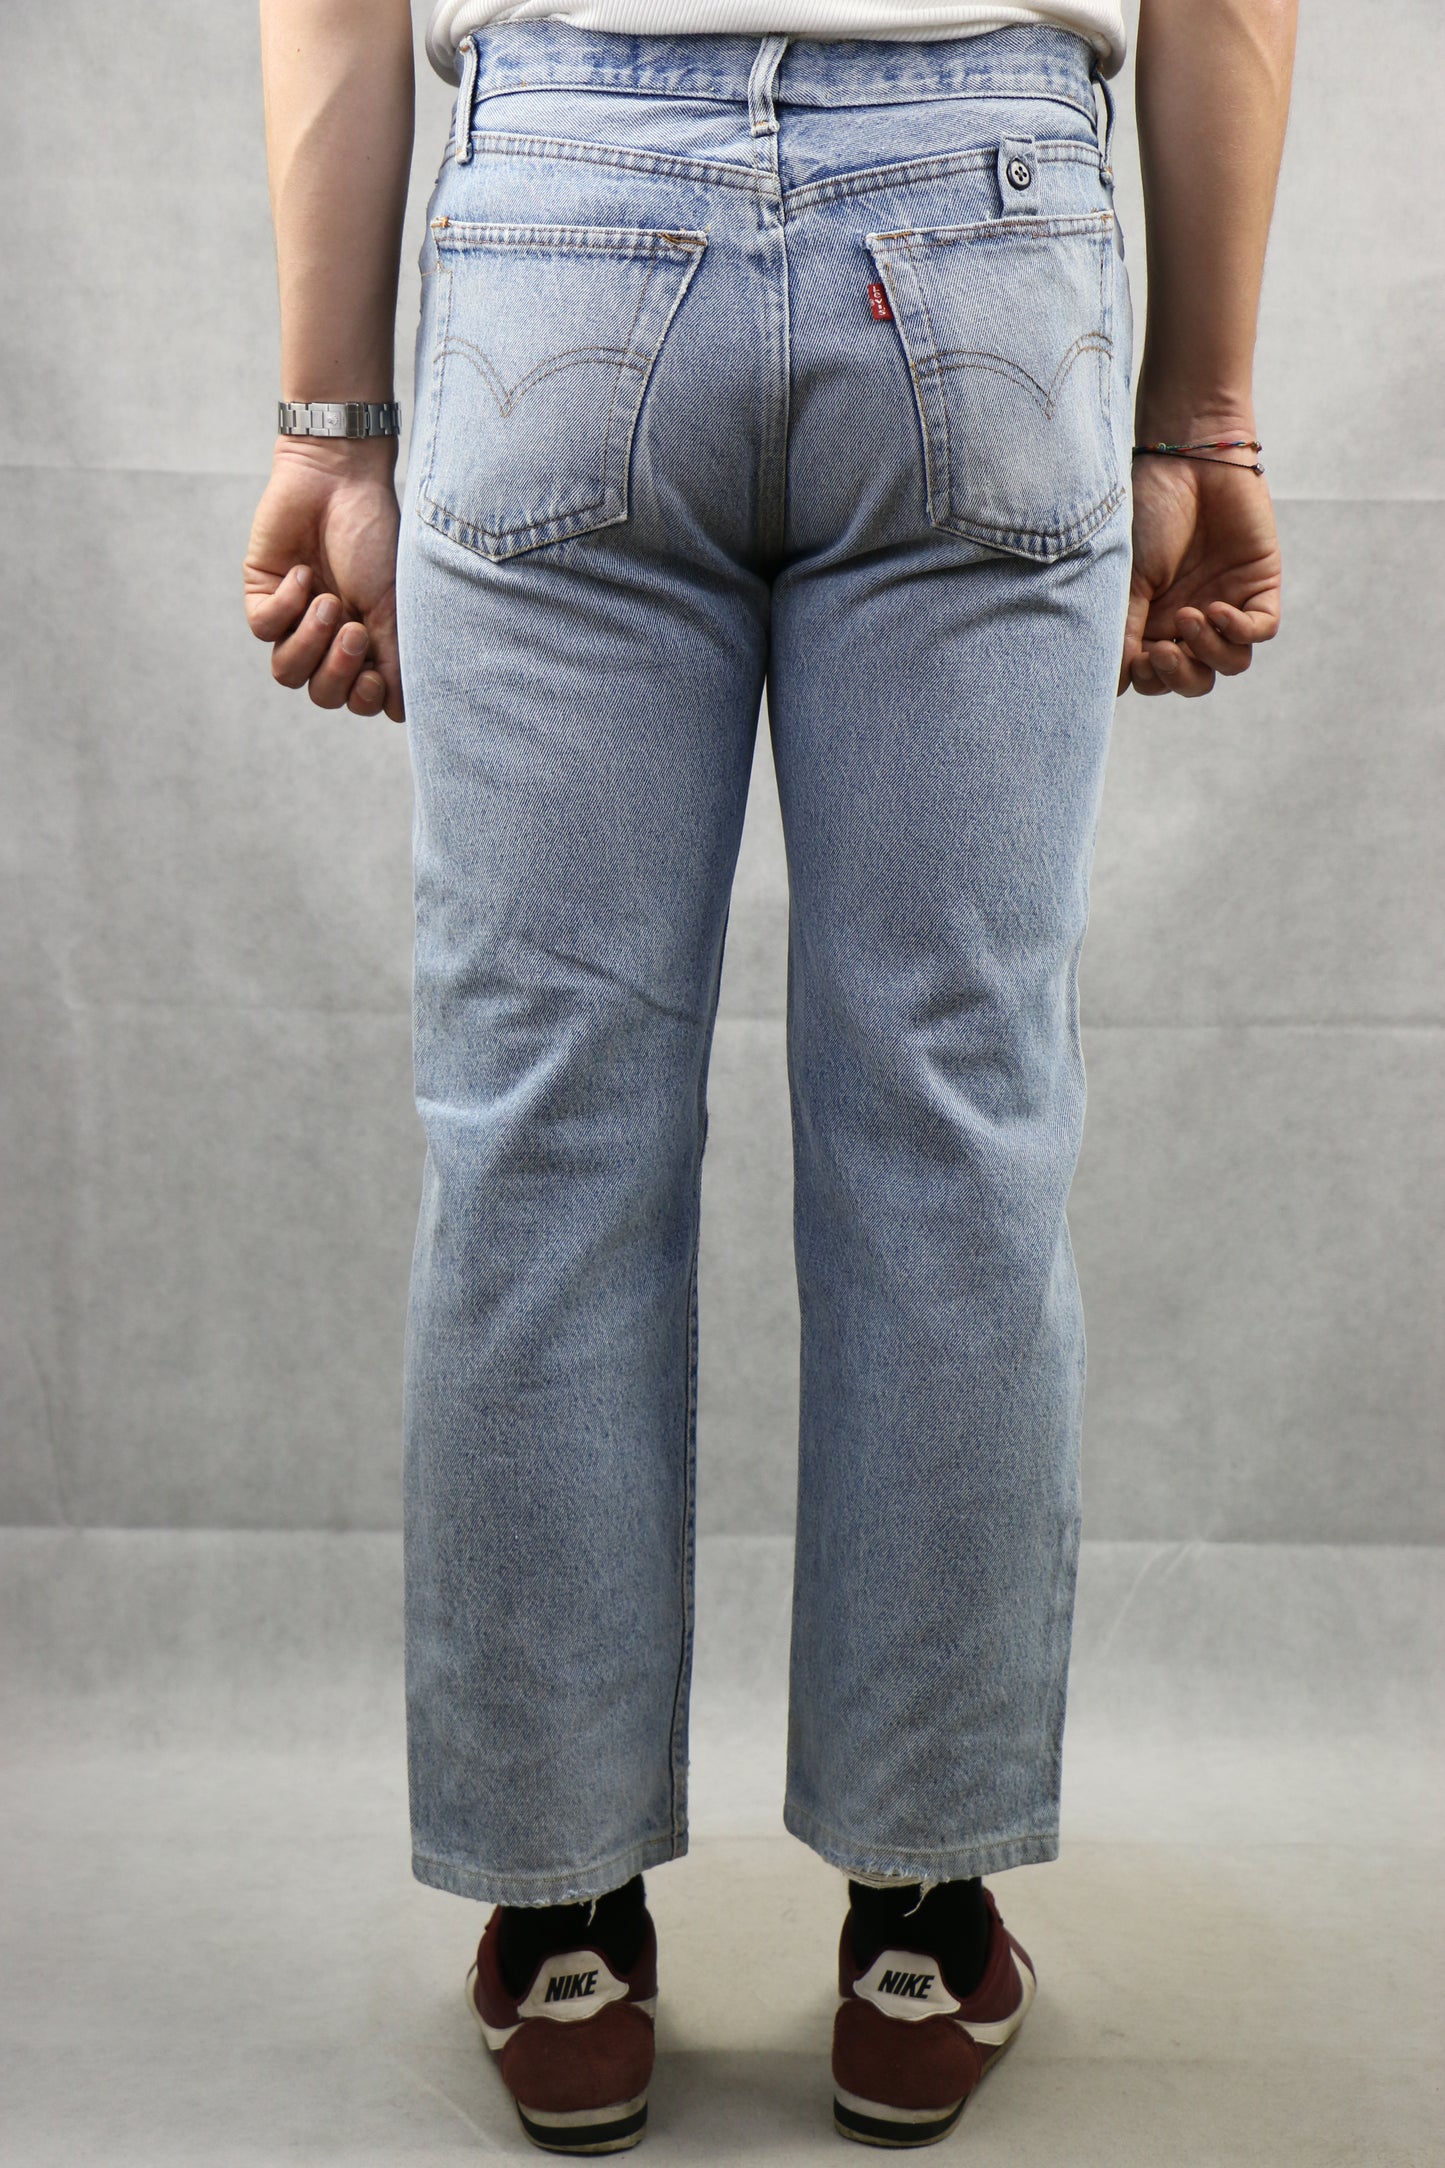 Levi's 501 Jeans with buttoned up back pocket, clochard92.com